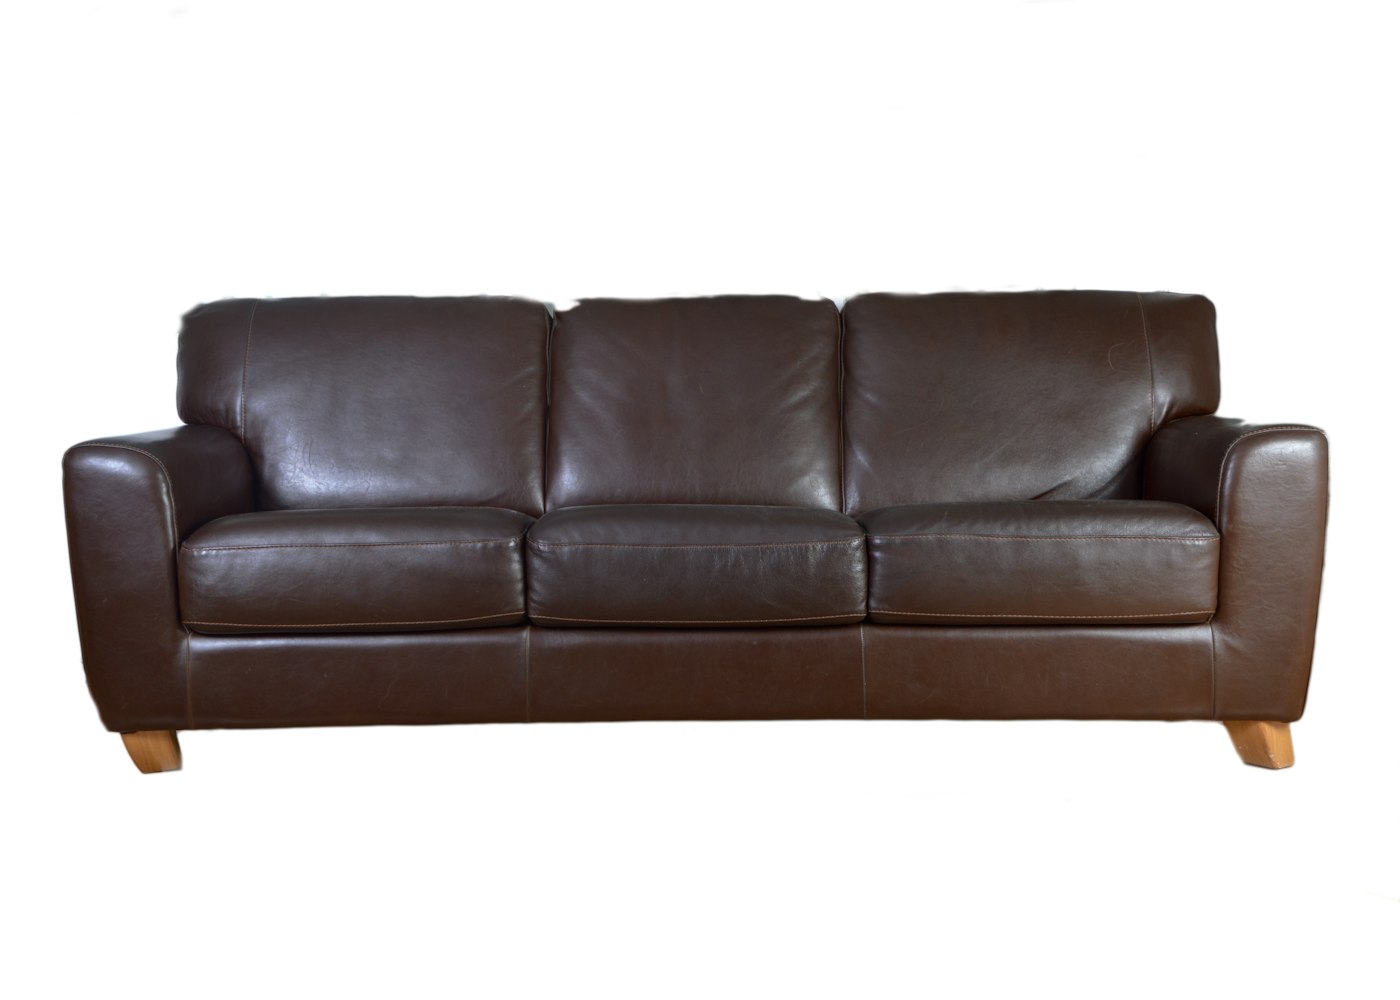 nicoletti leather sofa price